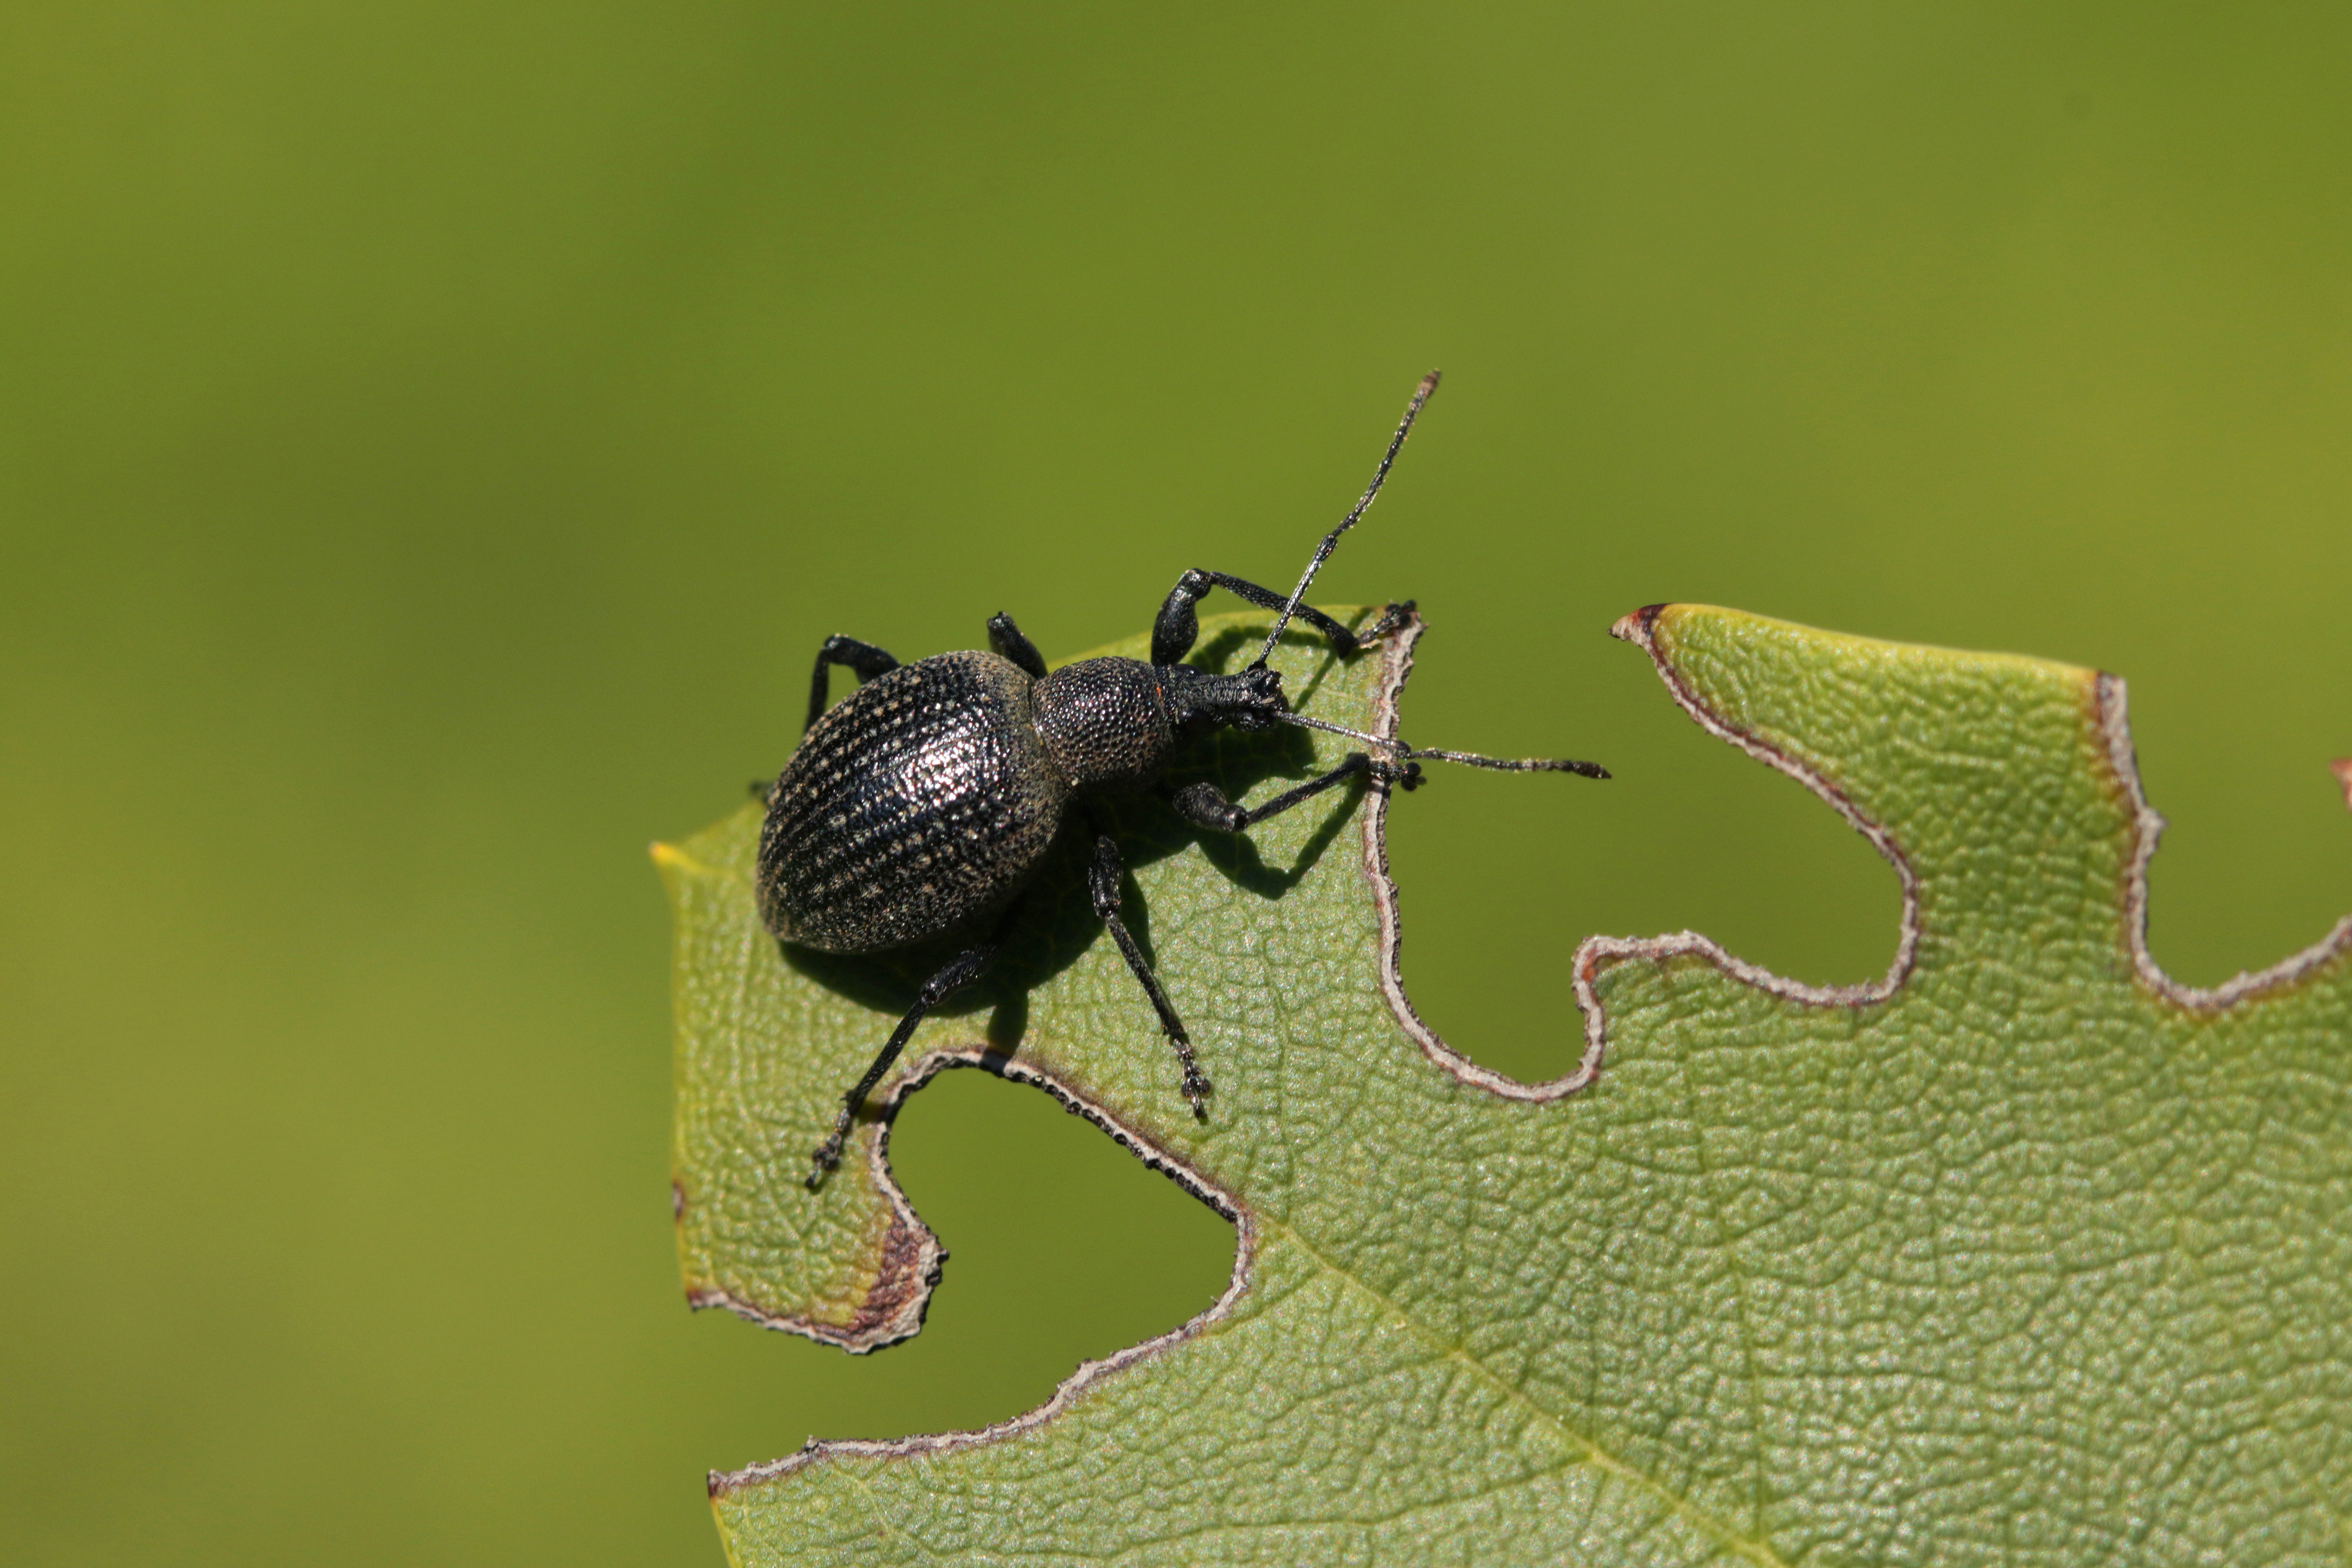 Nemasys L Nematode Control For Black Vine Weevil